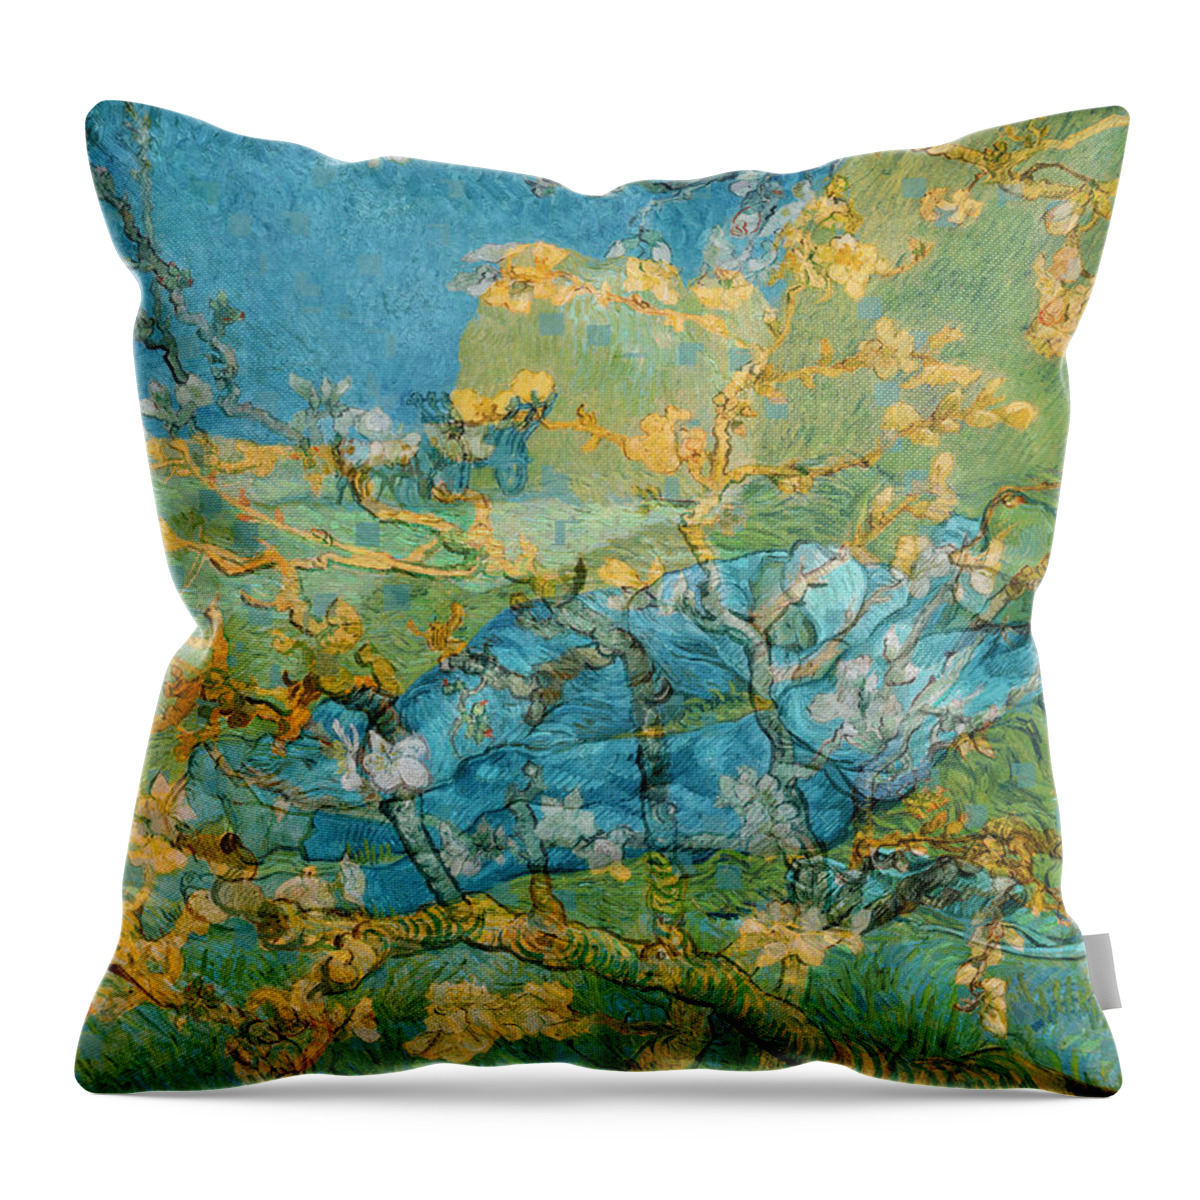 Post Modern Throw Pillow featuring the digital art Rustic 6 van Gogh by David Bridburg